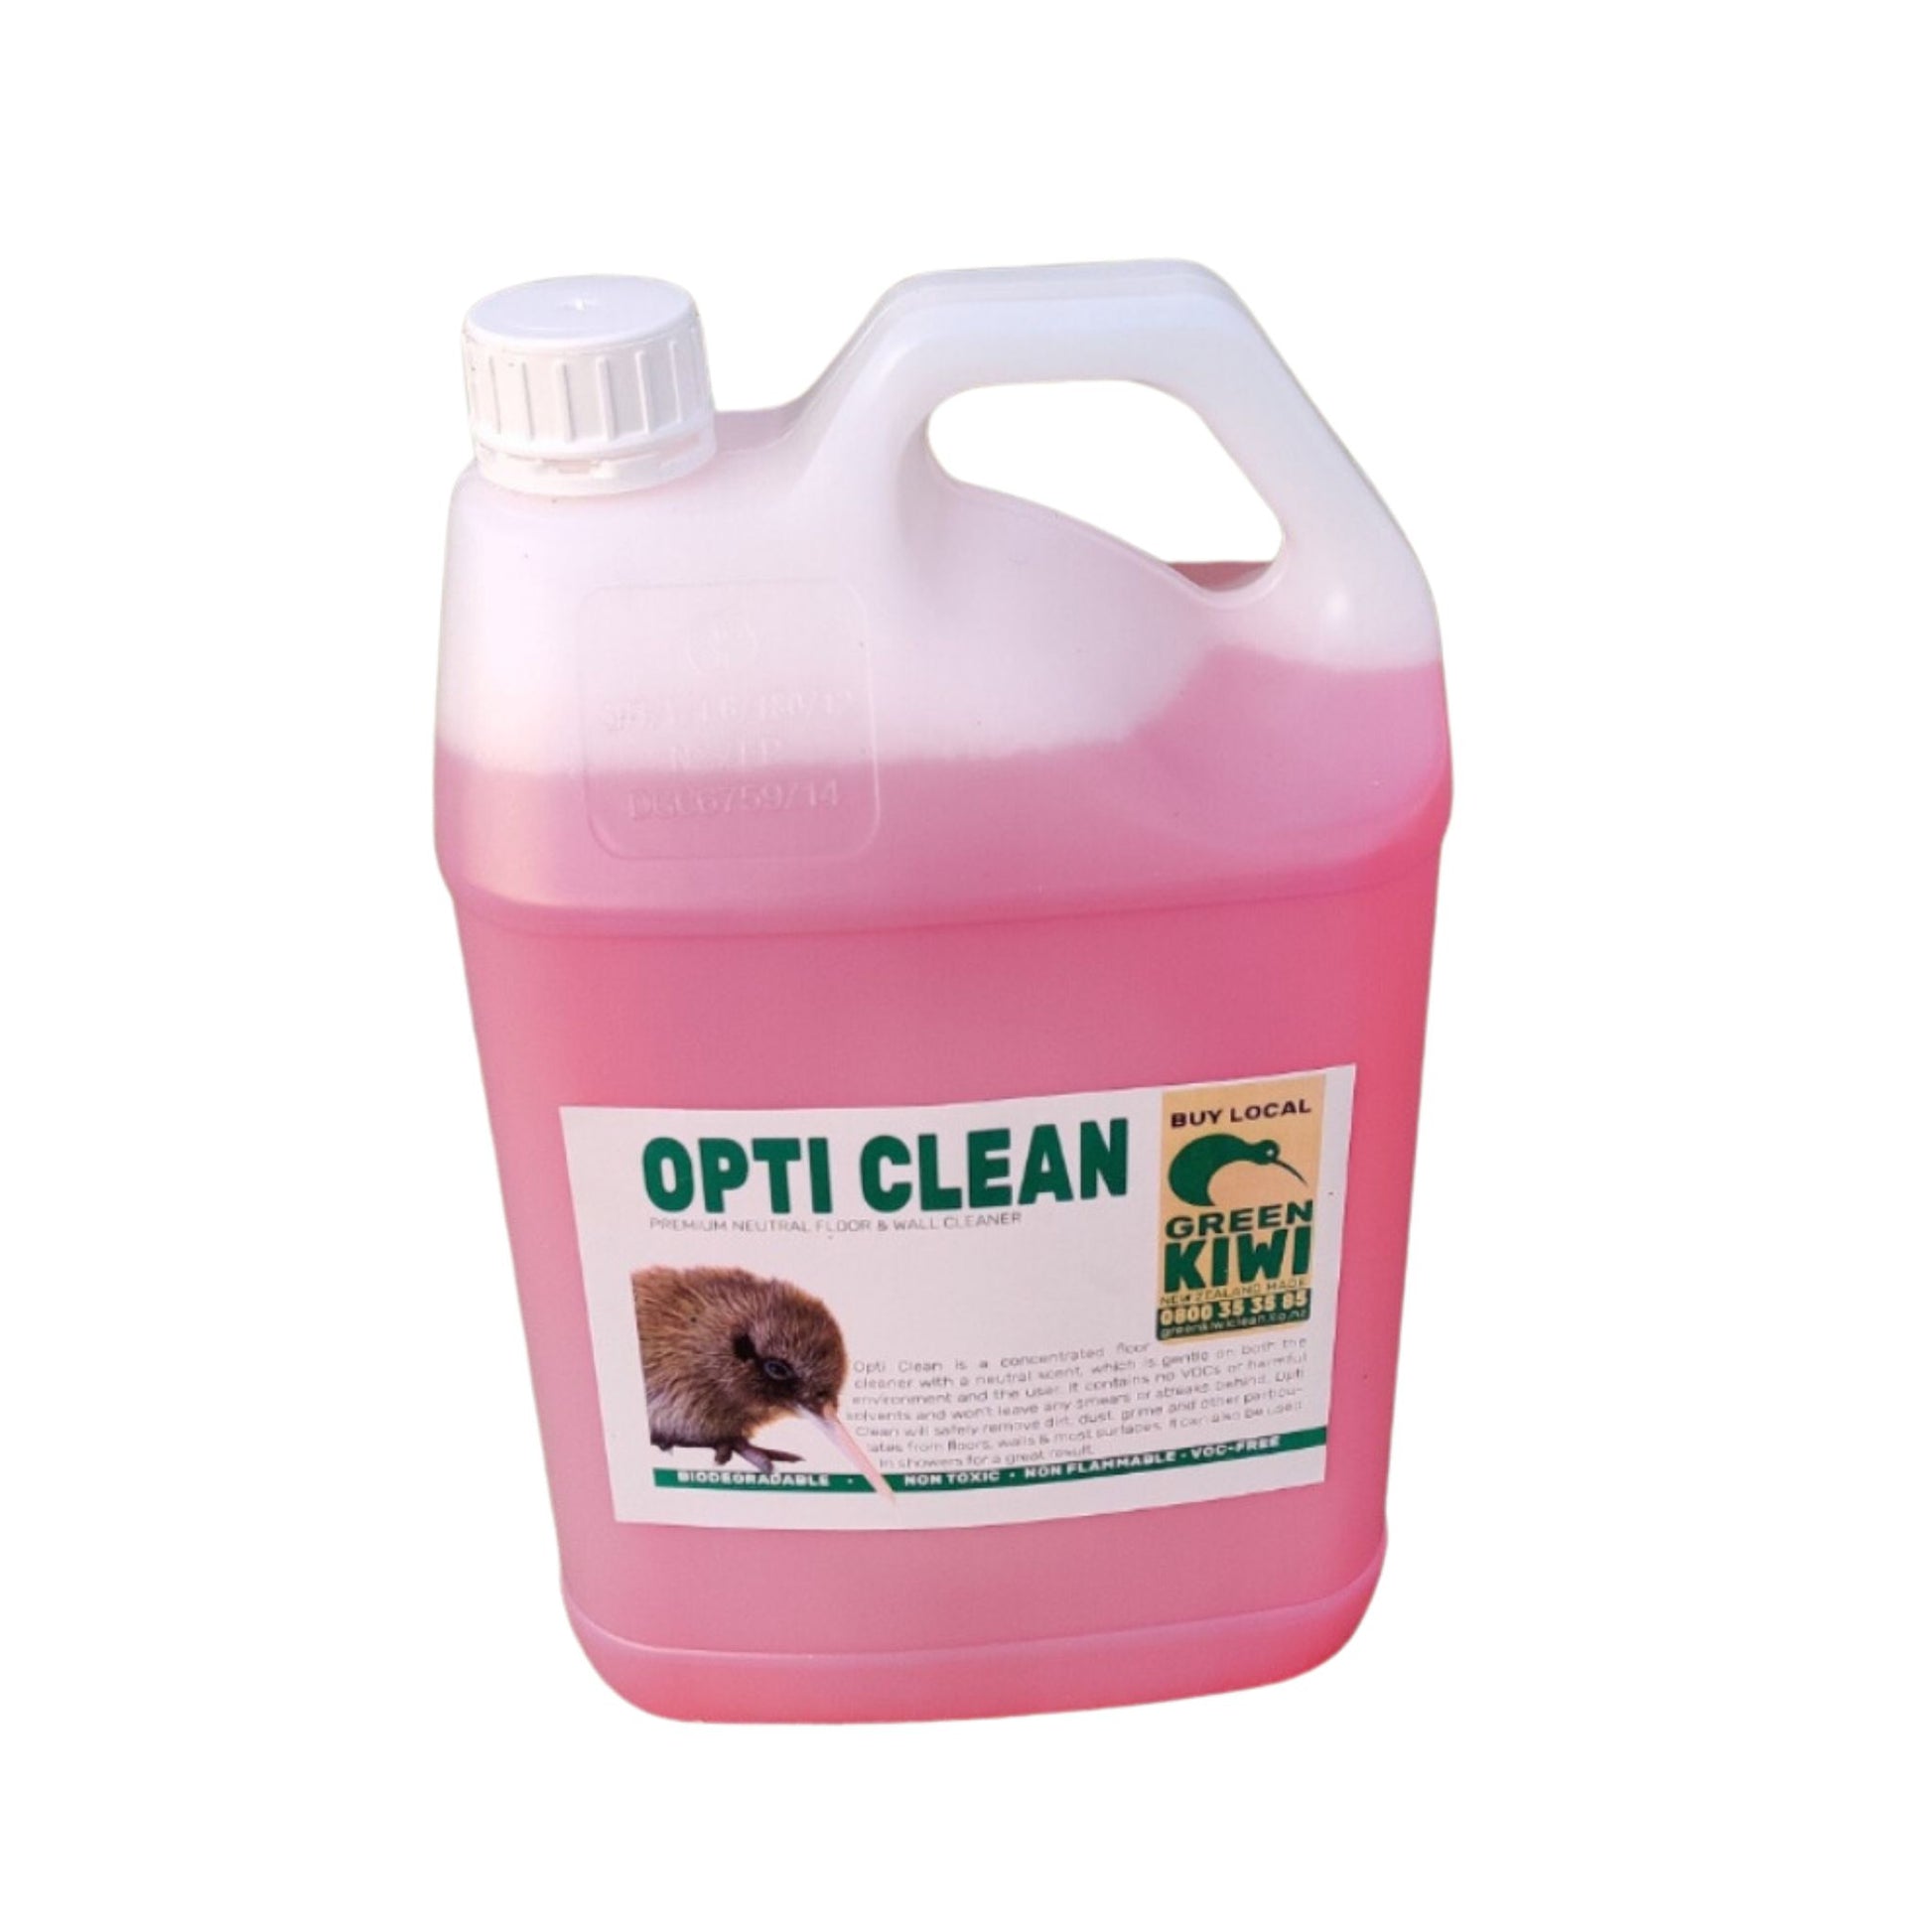 5L Opti Clean bathroom and multi-purpose cleaner